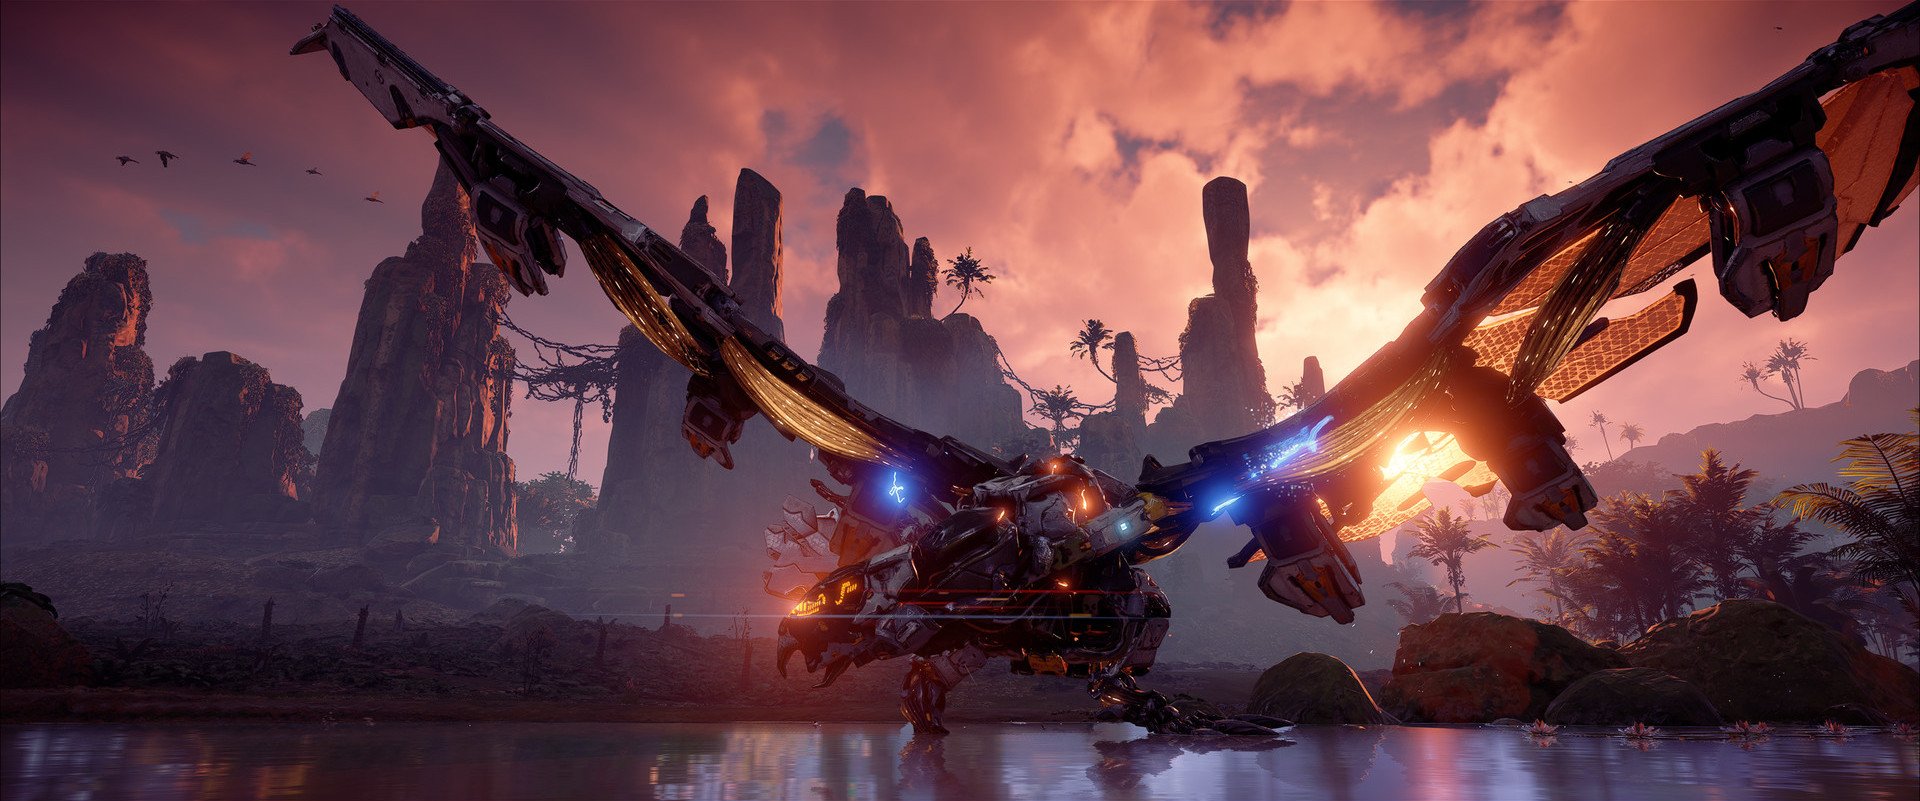 Horizon Zero Dawn devs to focus on sequel after new PC patch